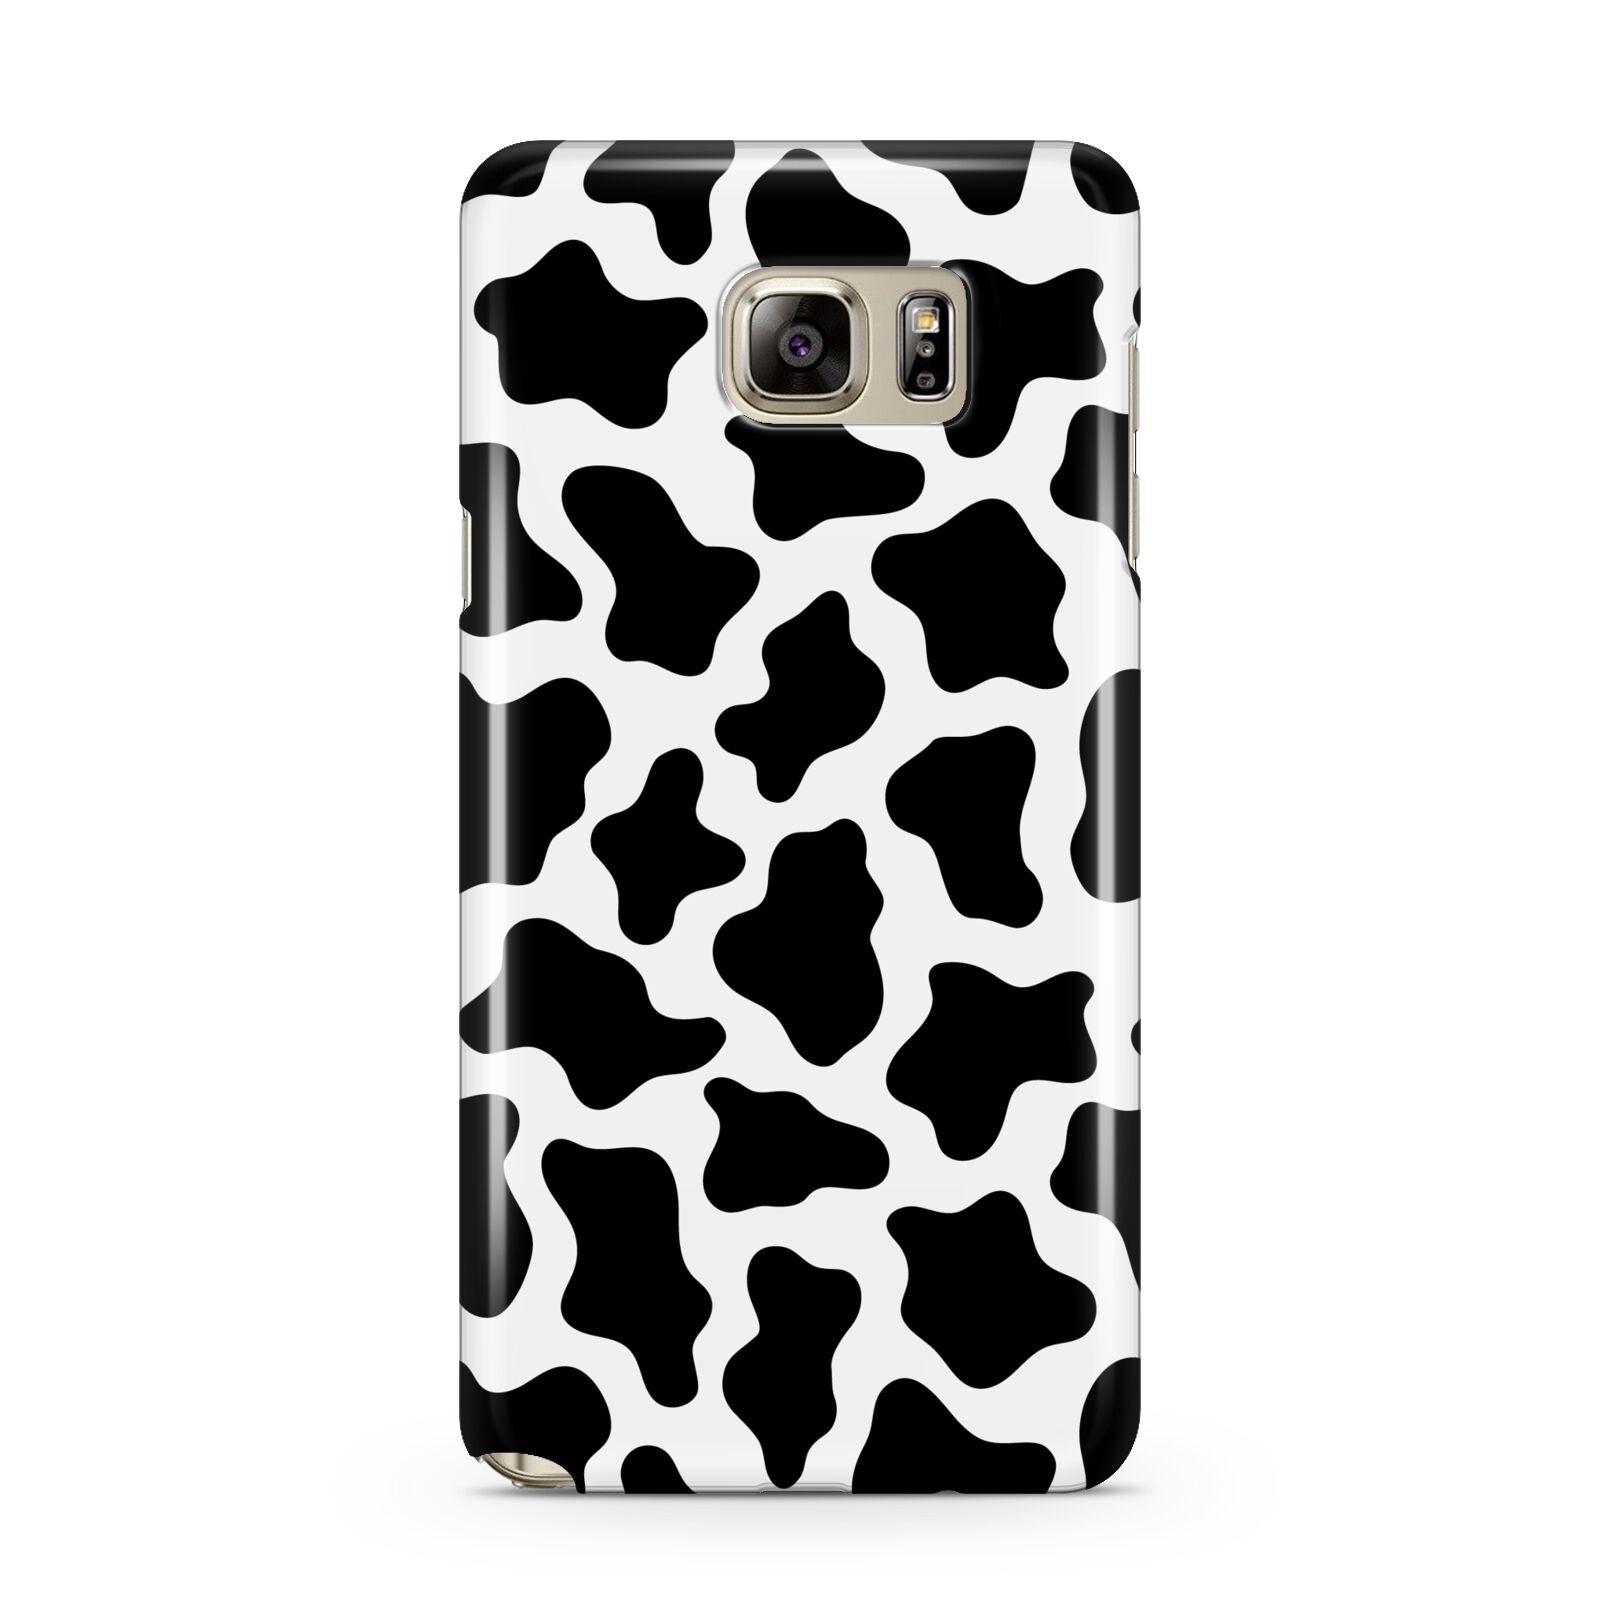 Cow Print Samsung Galaxy Note 5 Case